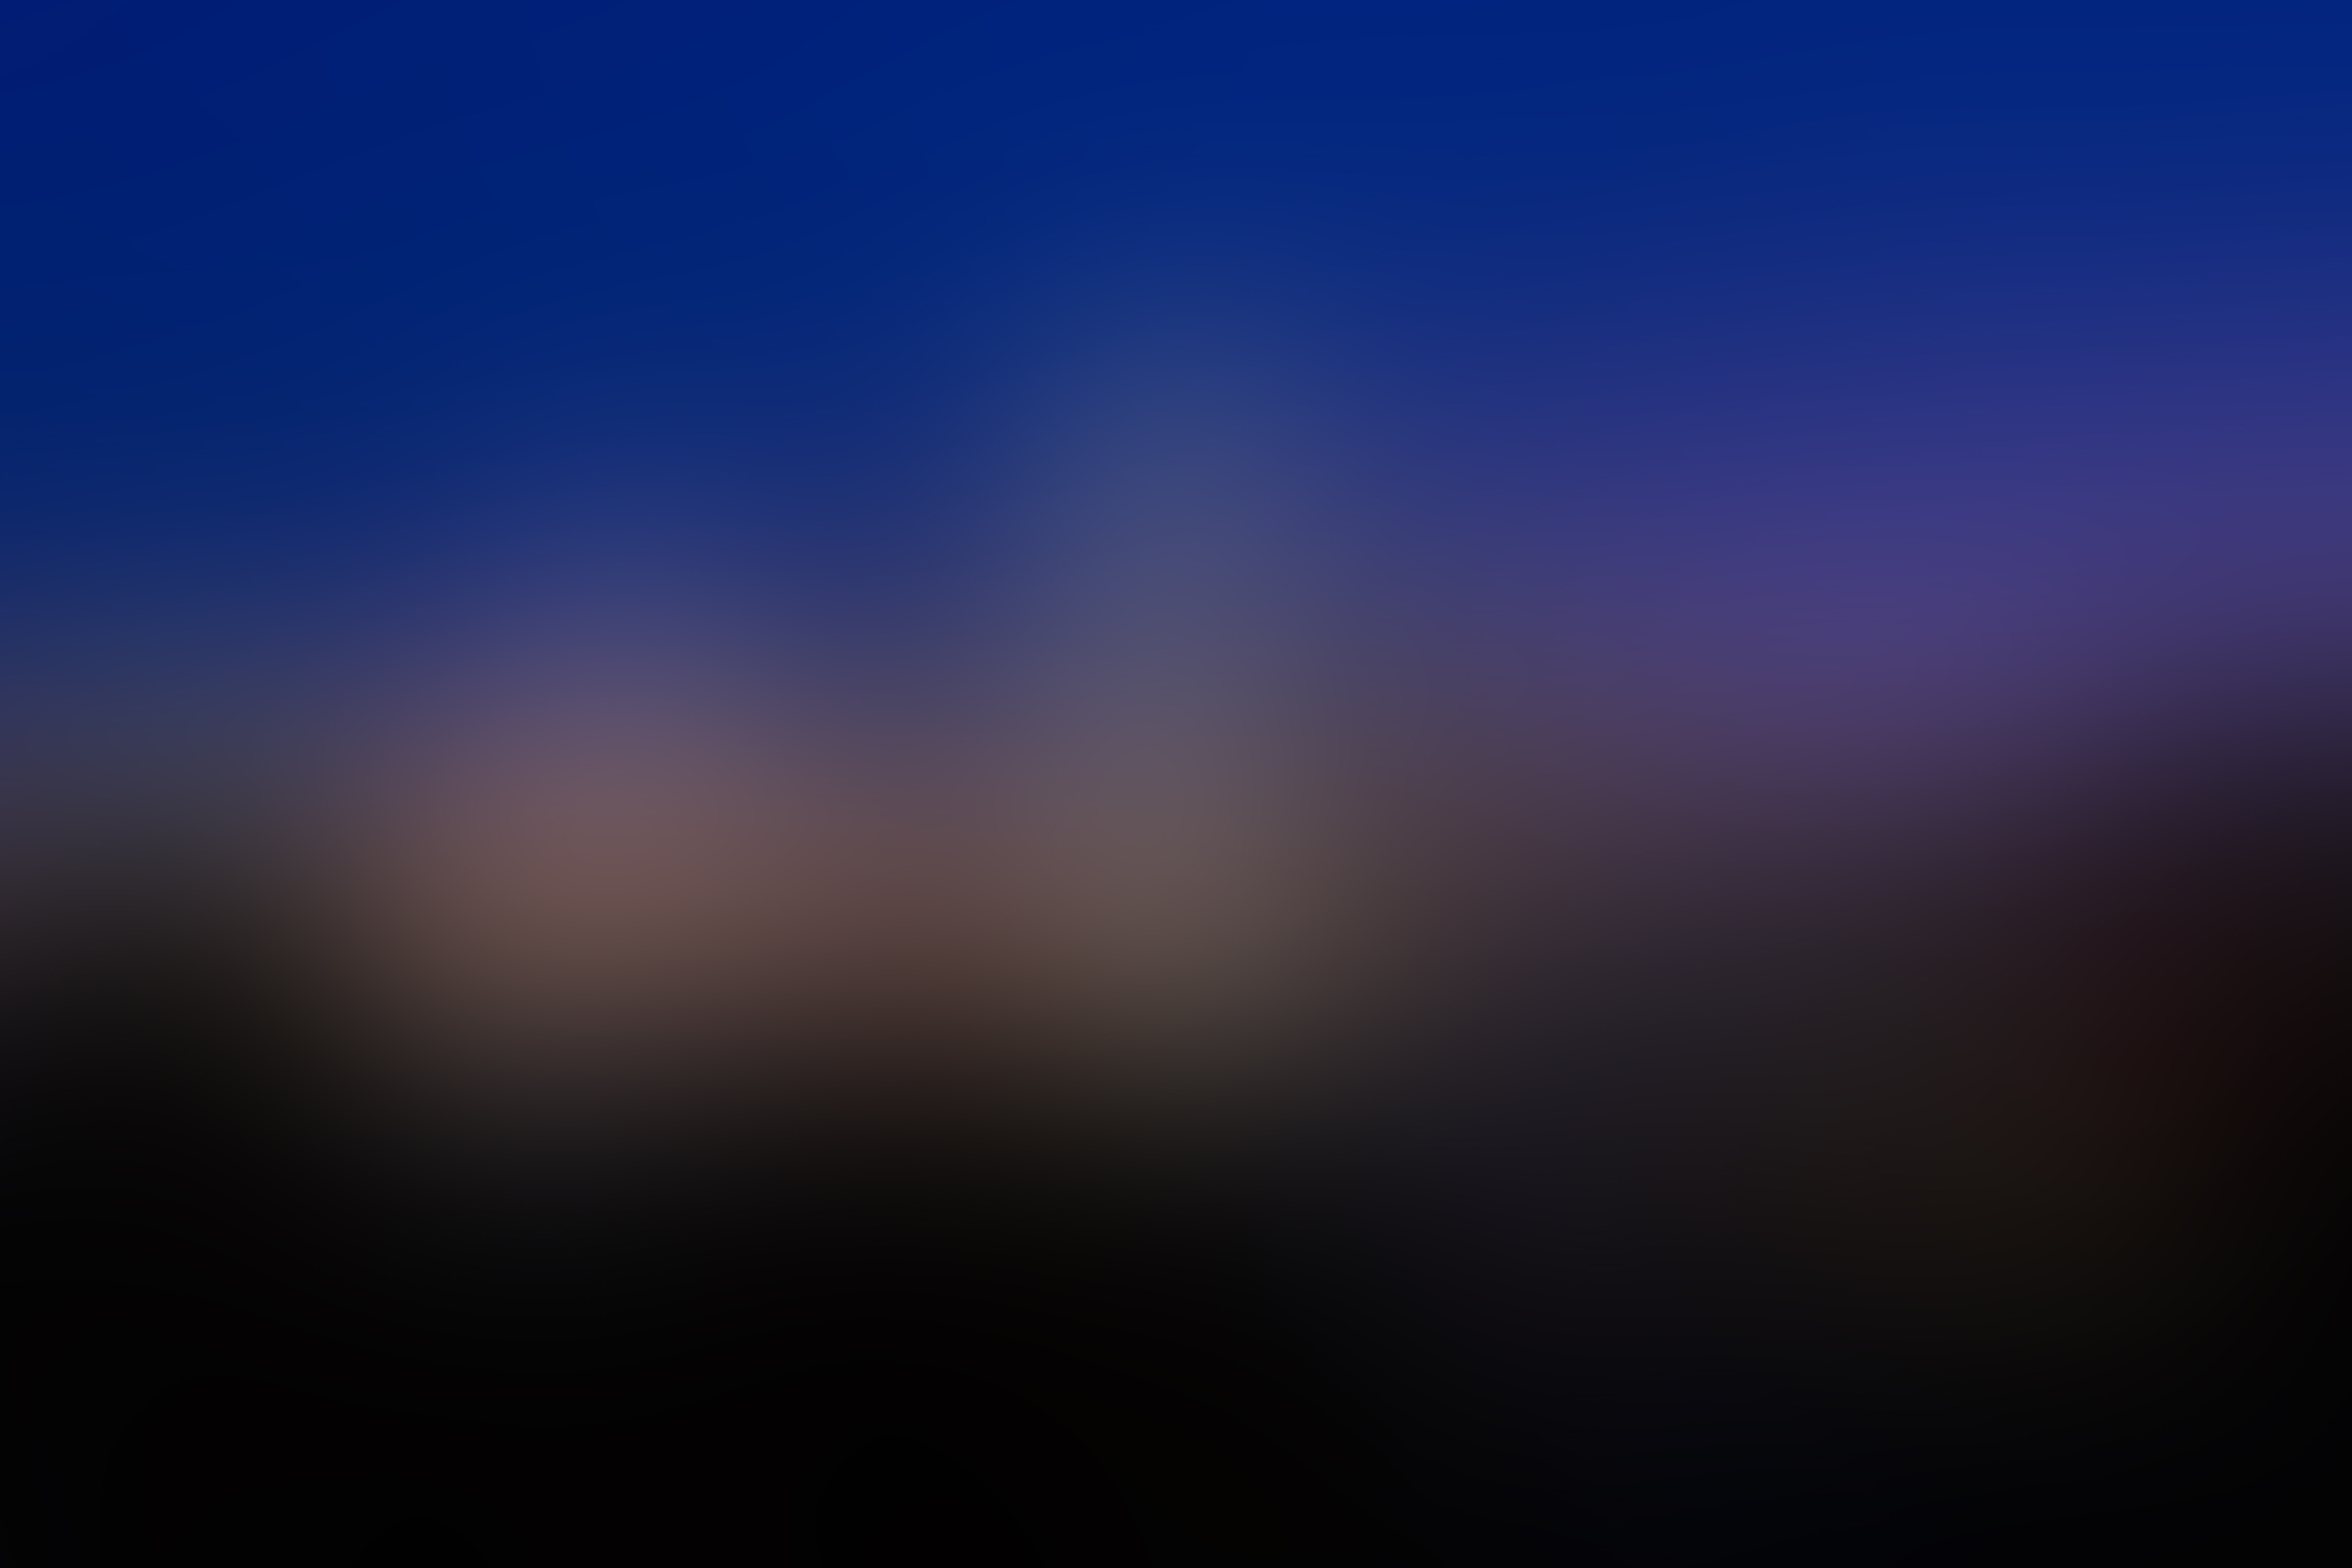 seattle blurred background